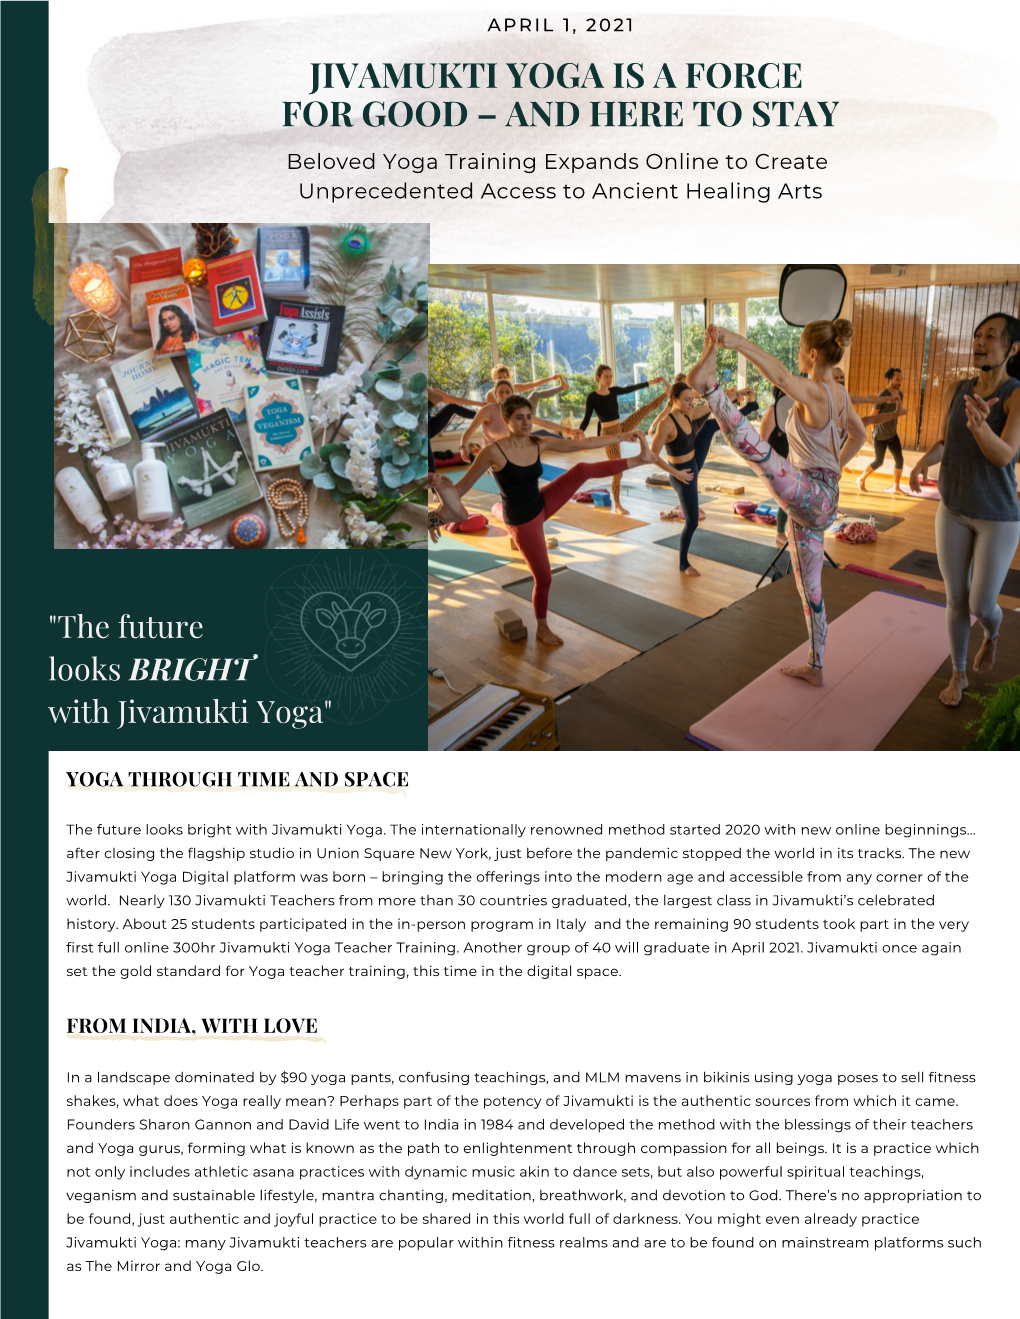 Press Release: Jivamukti Yoga Expands Renowned Yoga Training